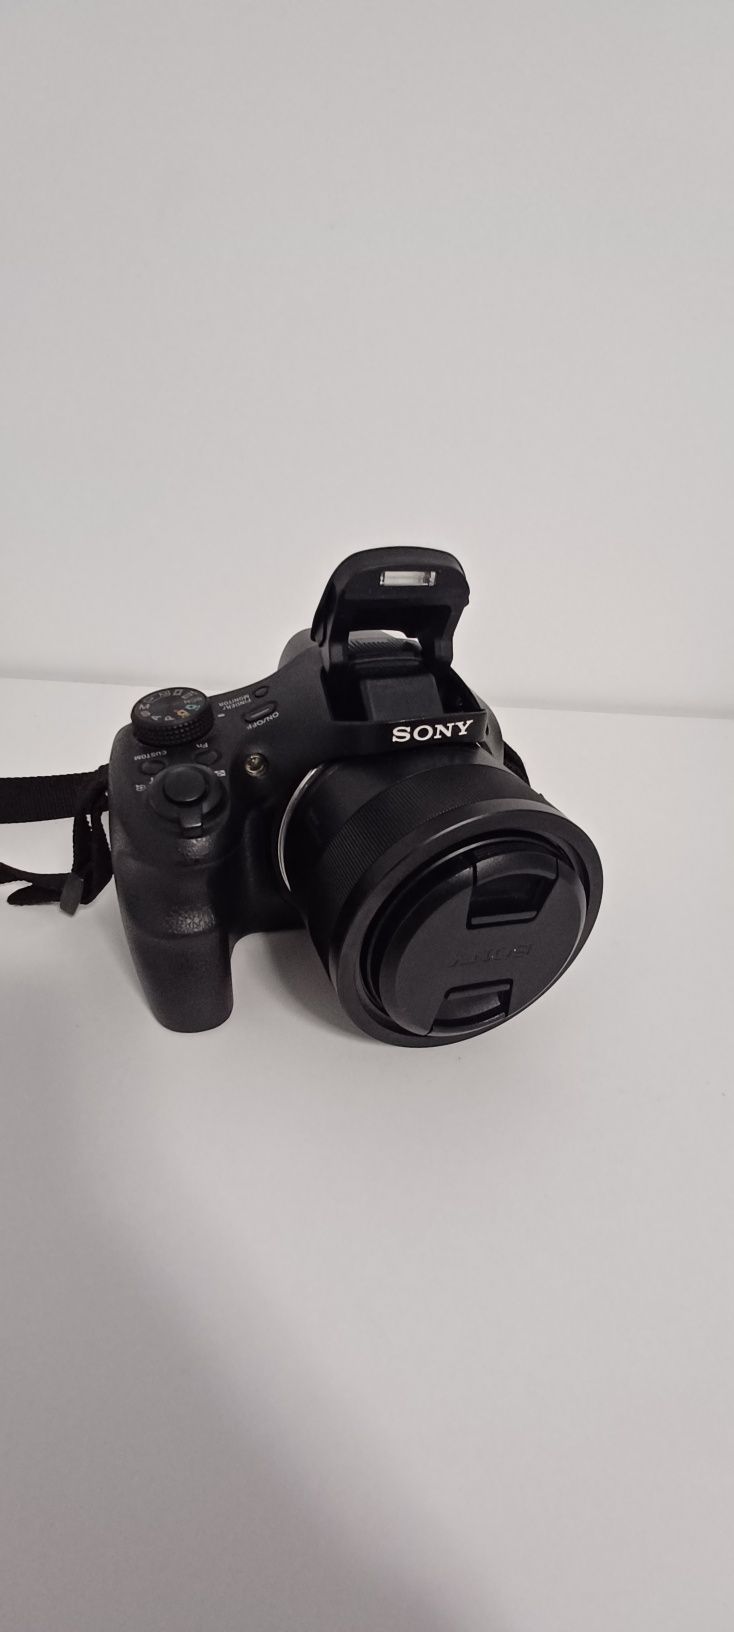 Camera foto/video Sony Cyber-shot DSC-HX350